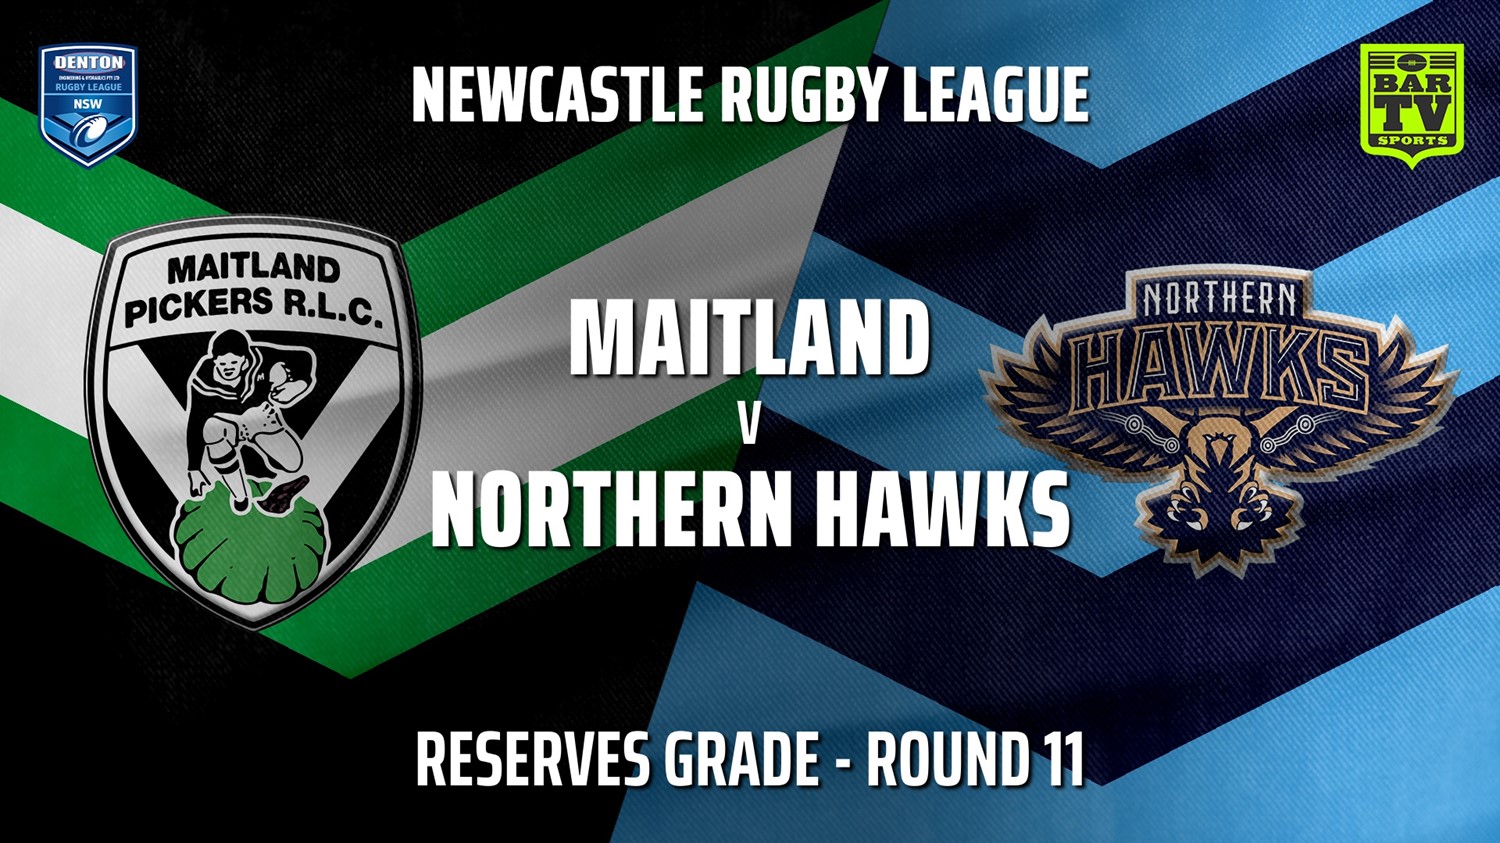 210612-Newcastle Round 11 - Reserves Grade - Maitland Pickers v Northern Hawks Slate Image